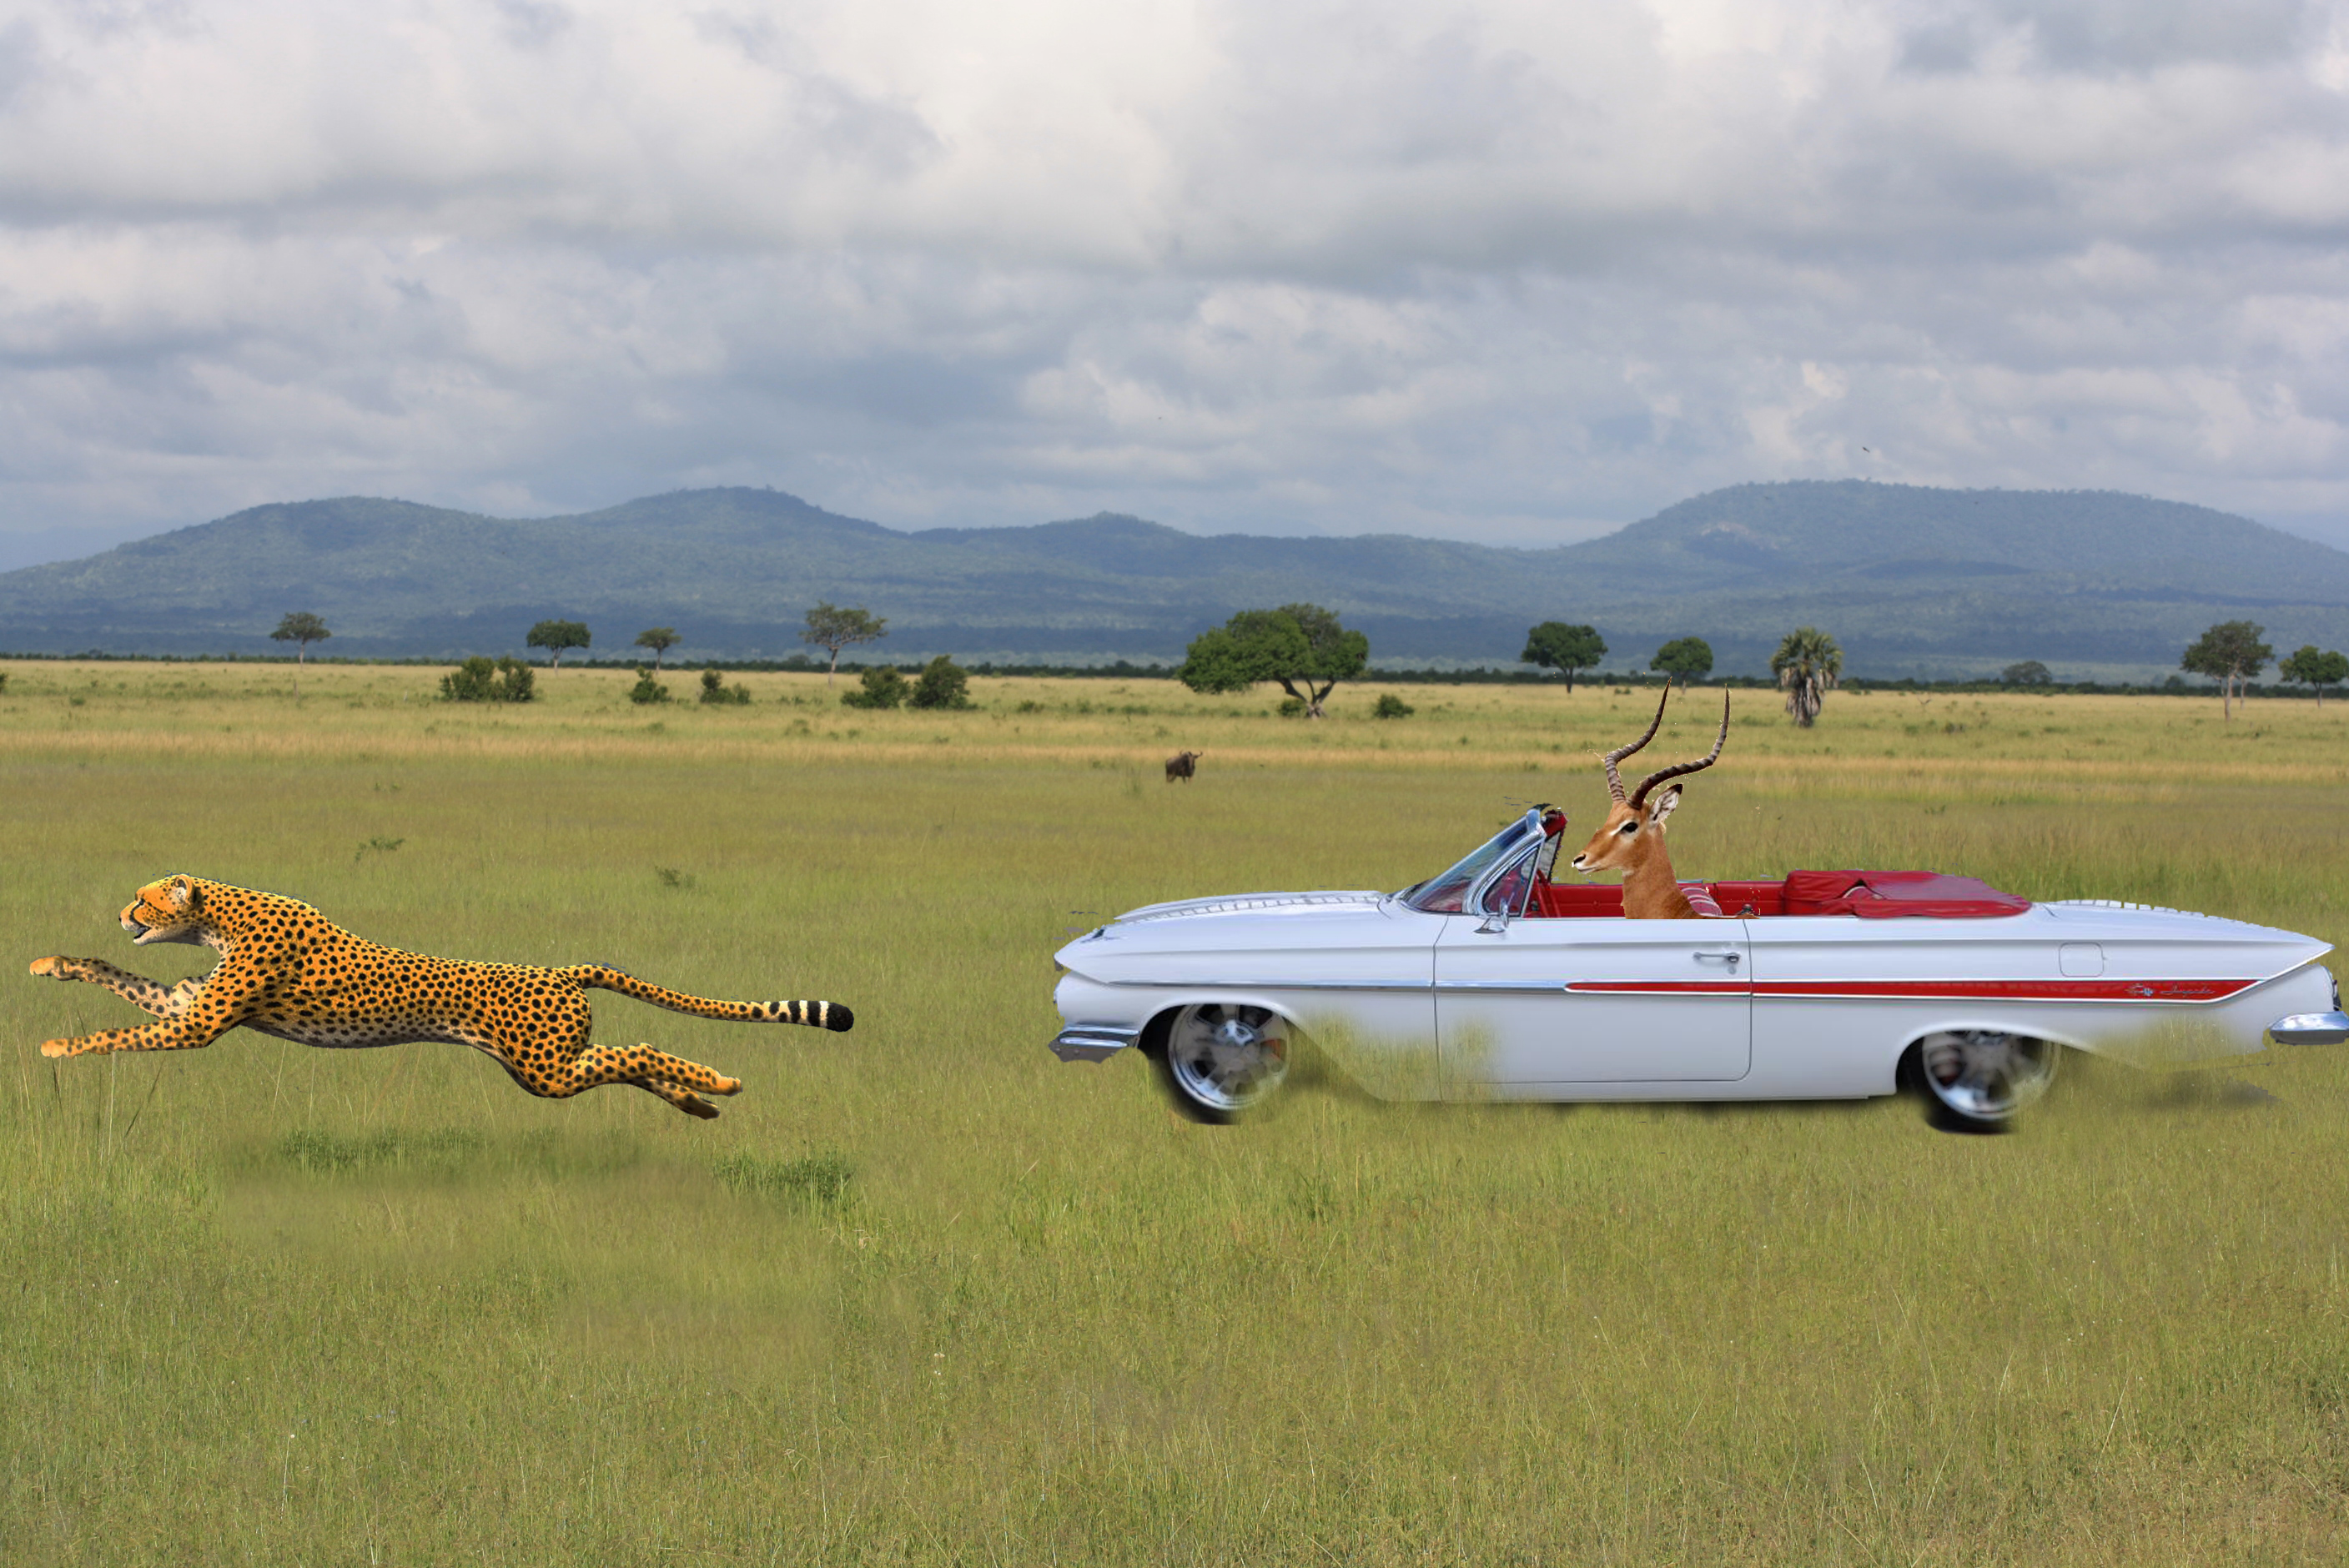 Impala-chasing-cheetah-rod-ash